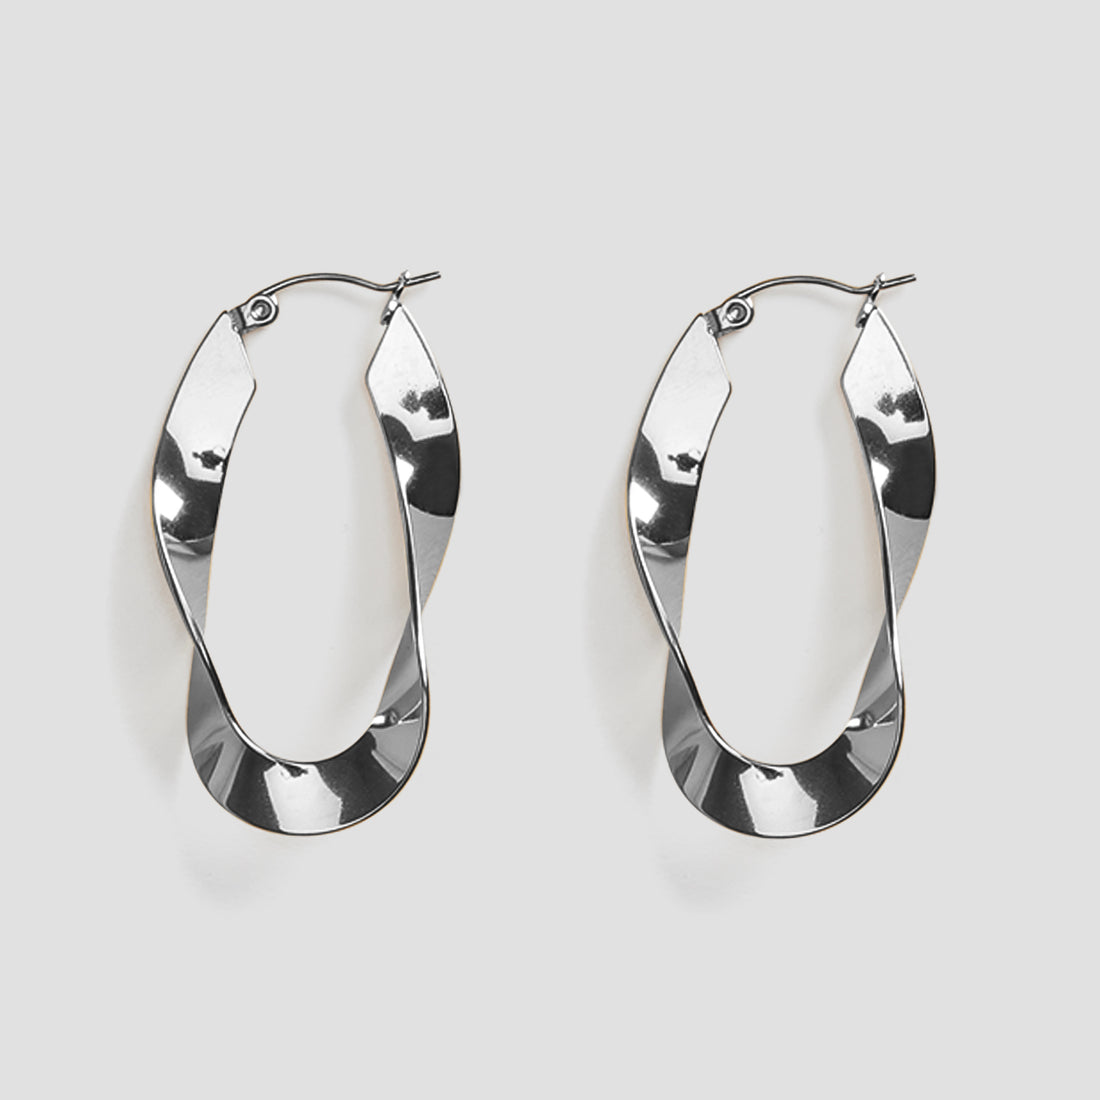 Twisted Oblong Stainless Steel Earrings